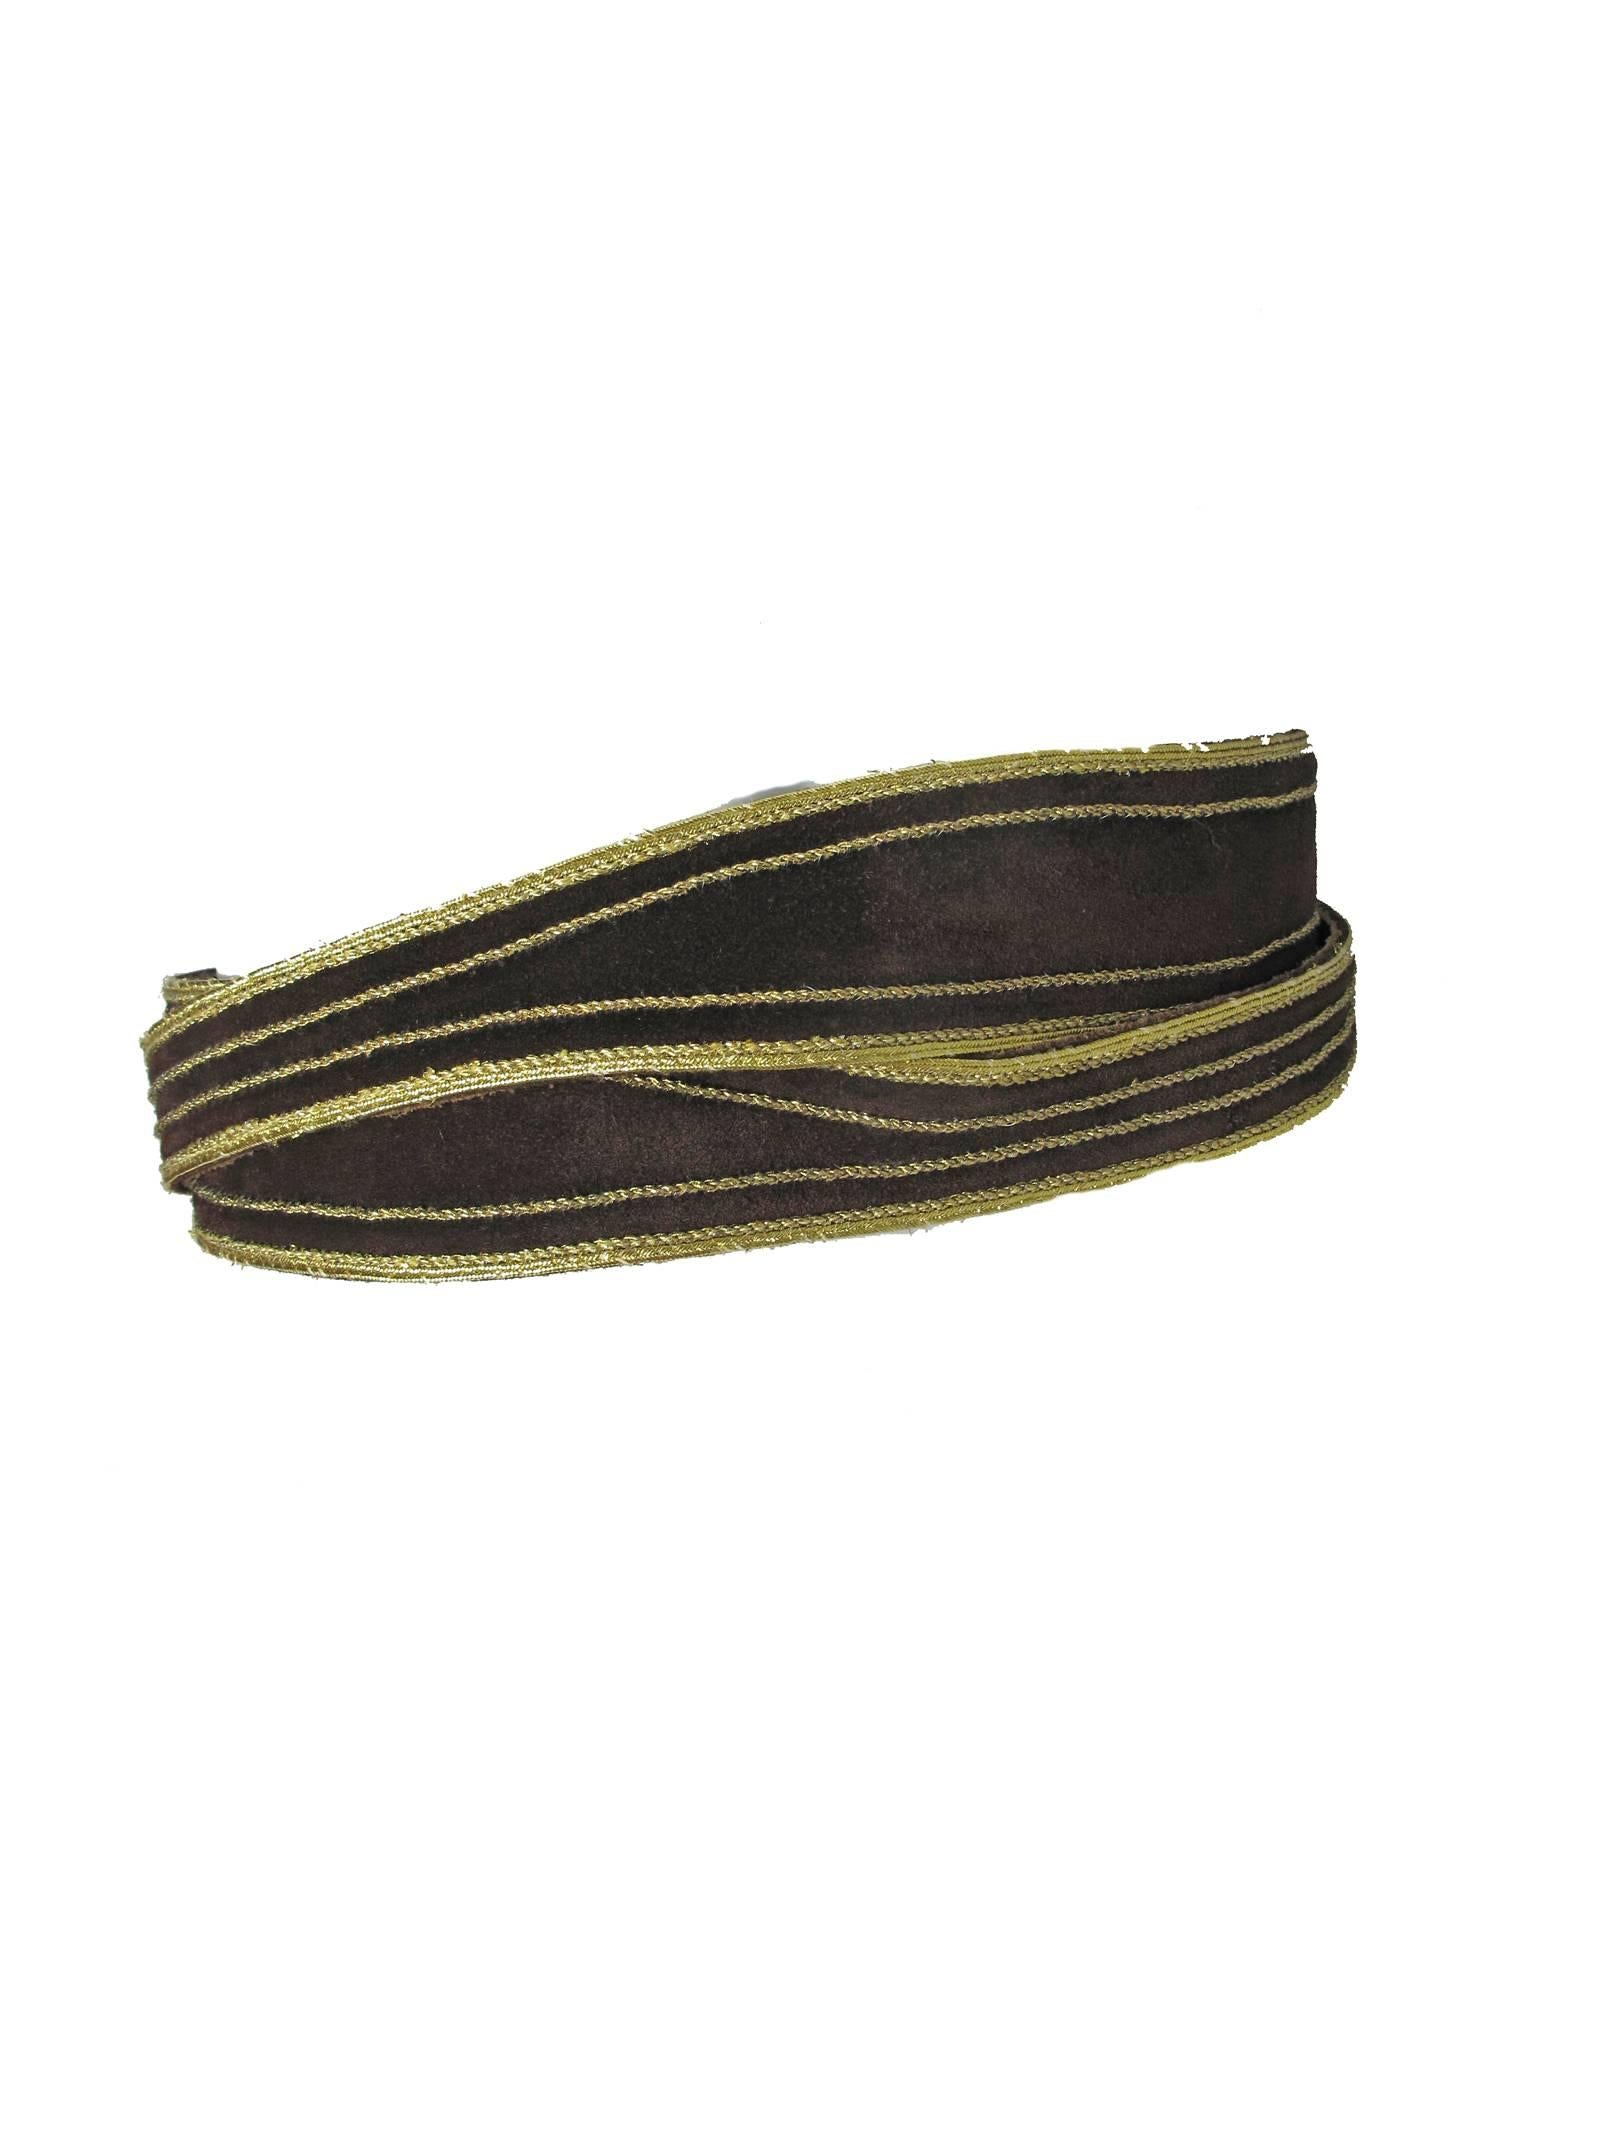 1970s - 1980s Yves Saint Laurent brown suede wrap waist belt with gold trim.  2